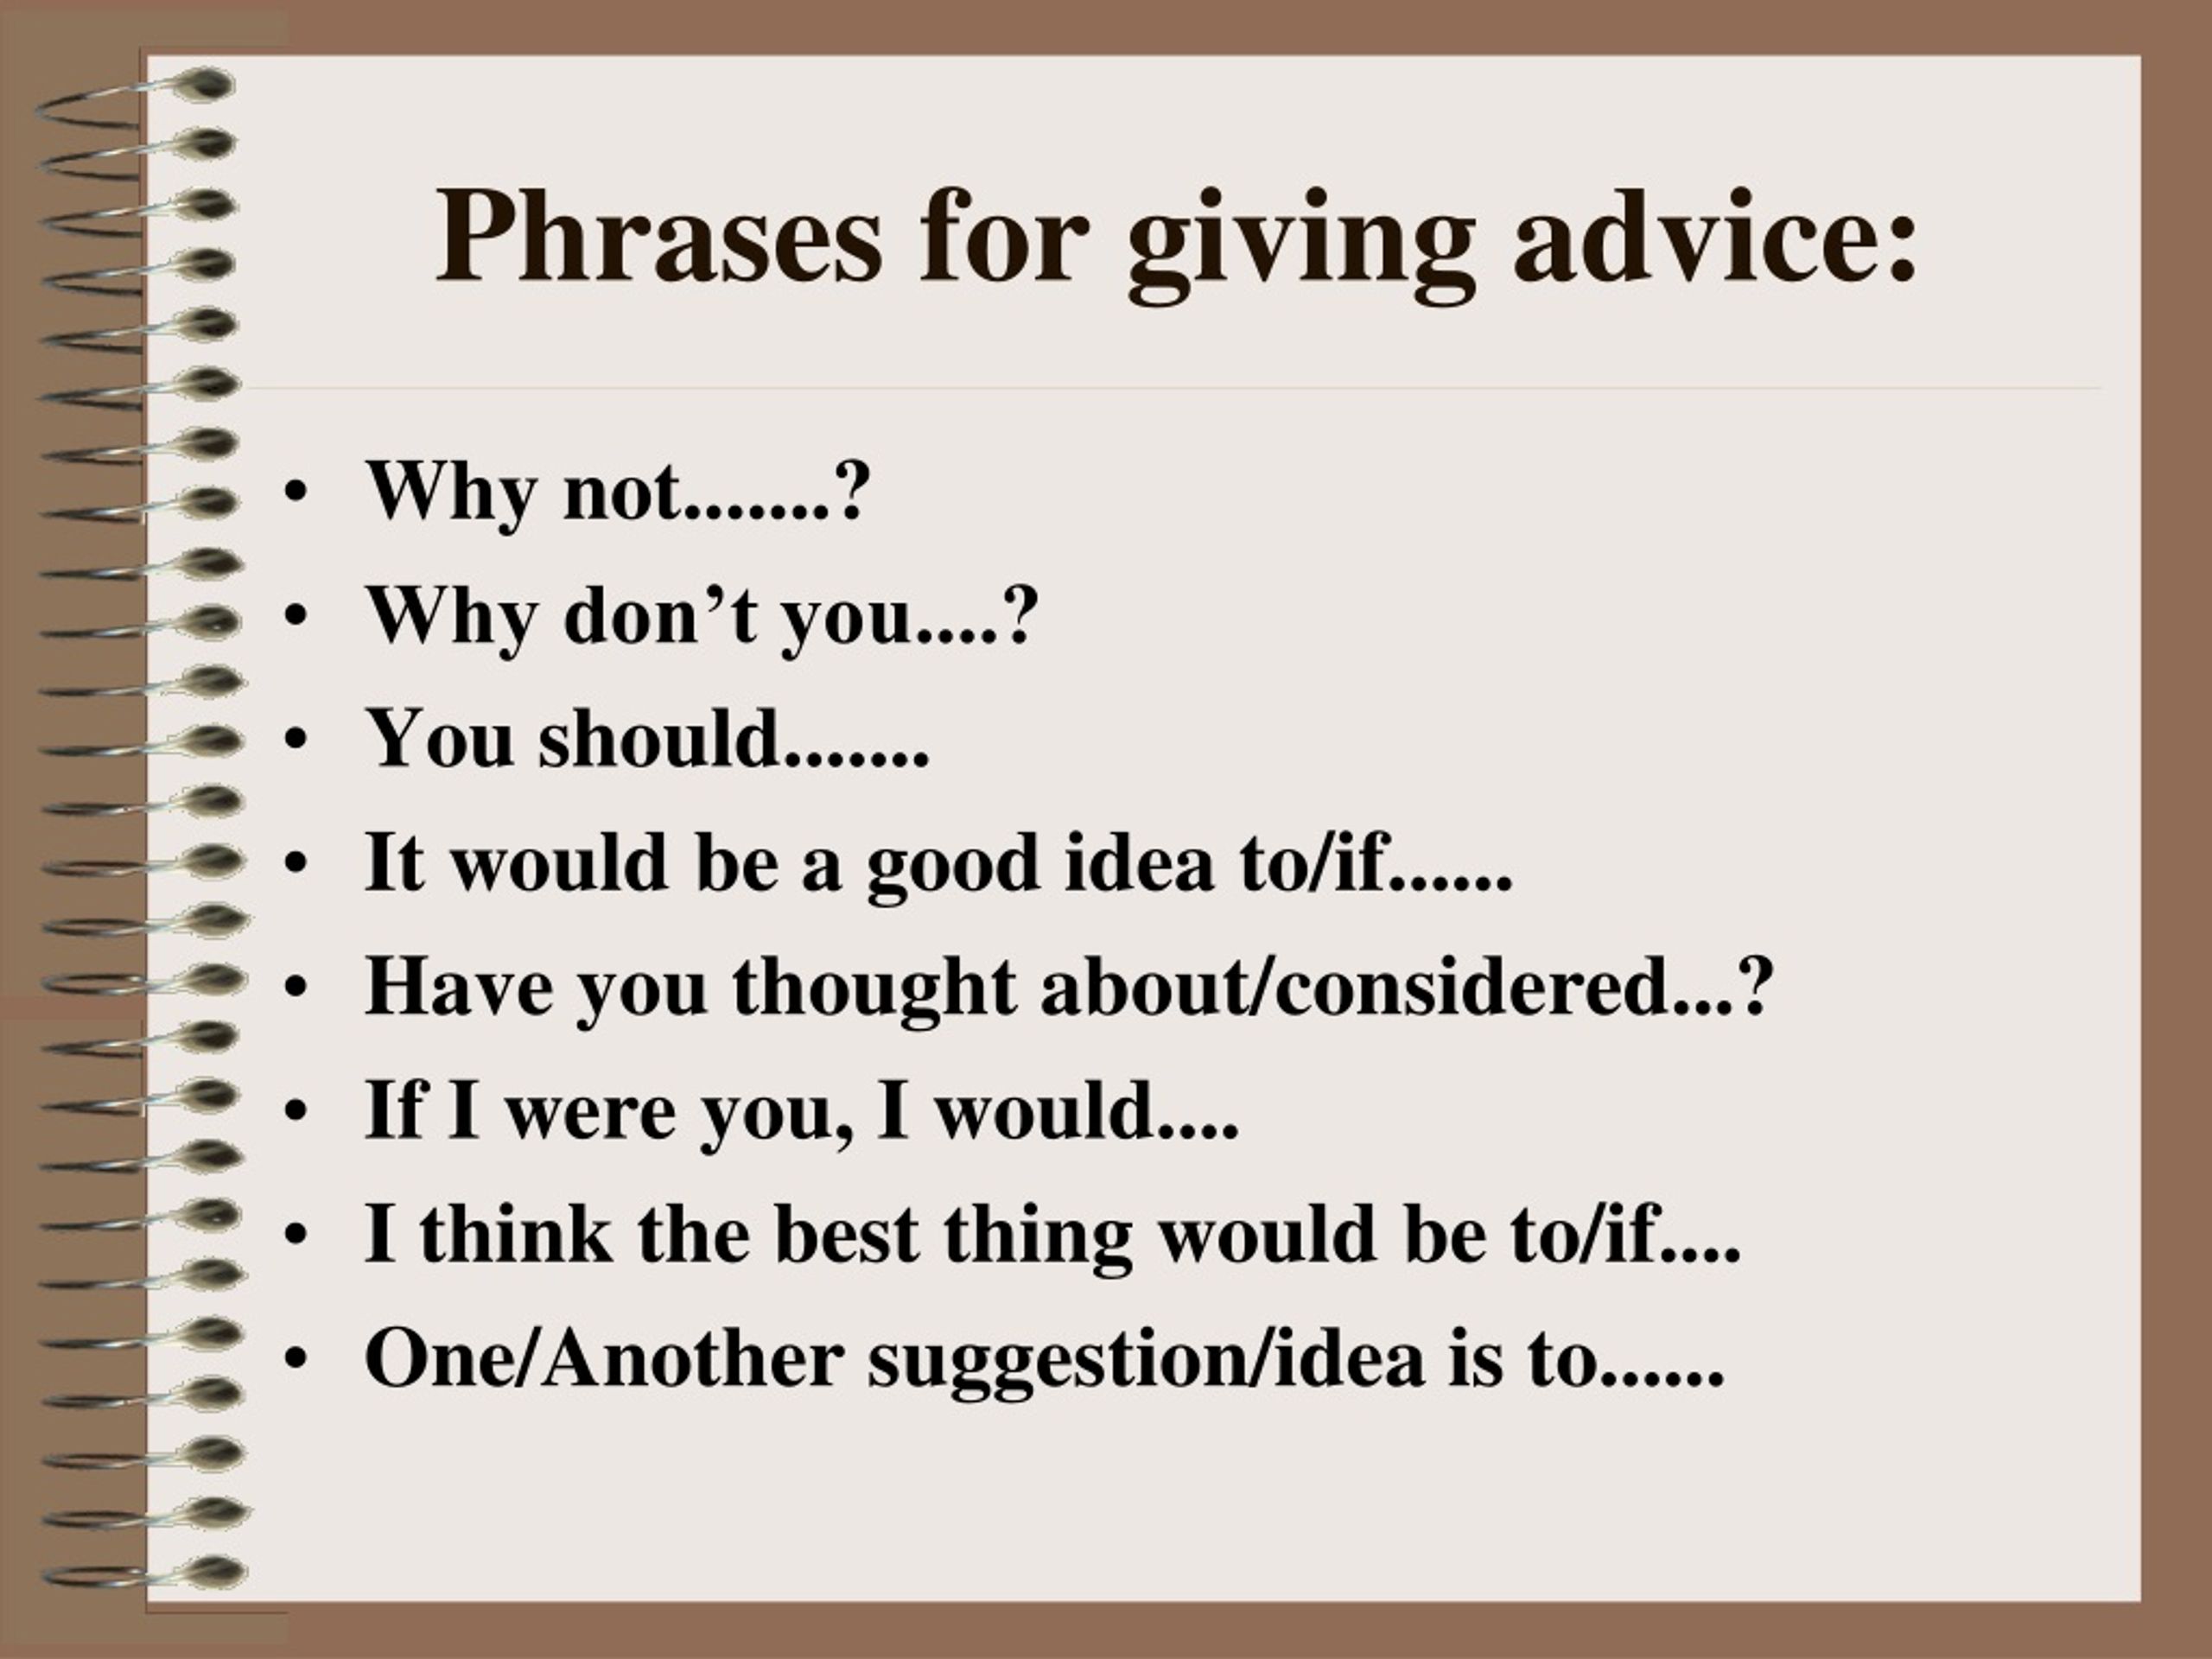 Match the advice. Letter of advice пример. Giving advice упражнения. Advice на английском. Giving advice phrases.